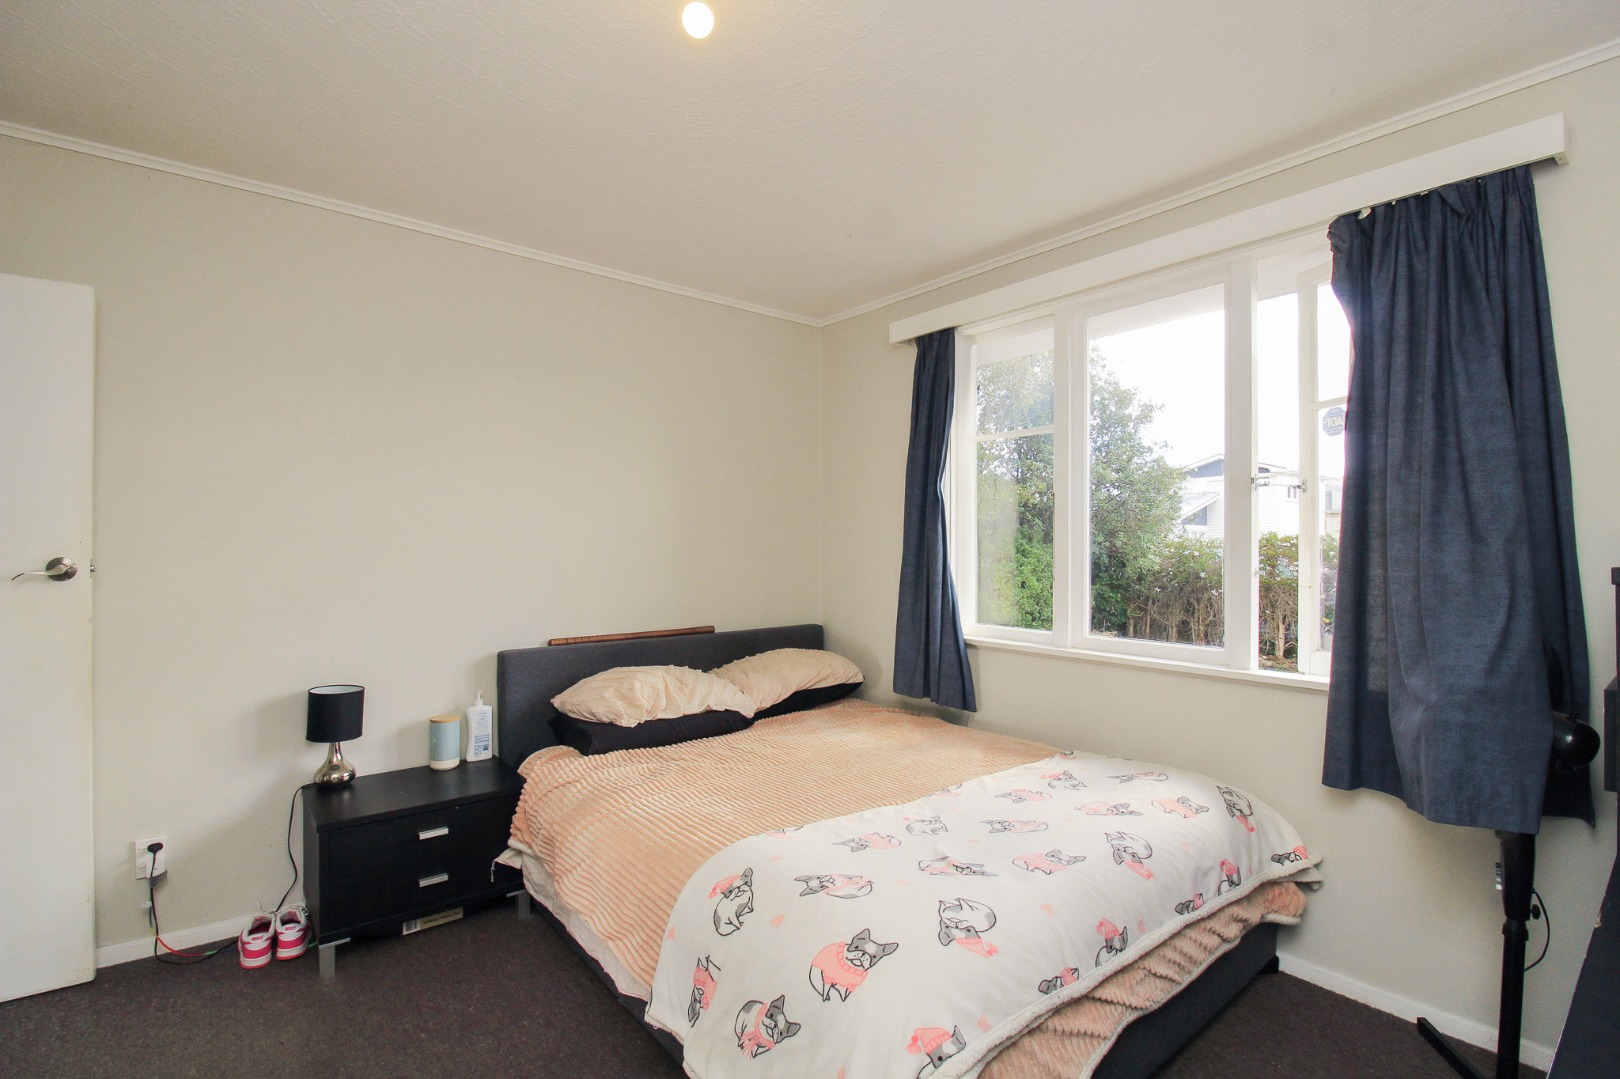 3 Bedrooms, Wallaceville, Upper Hutt, Wellington image 7